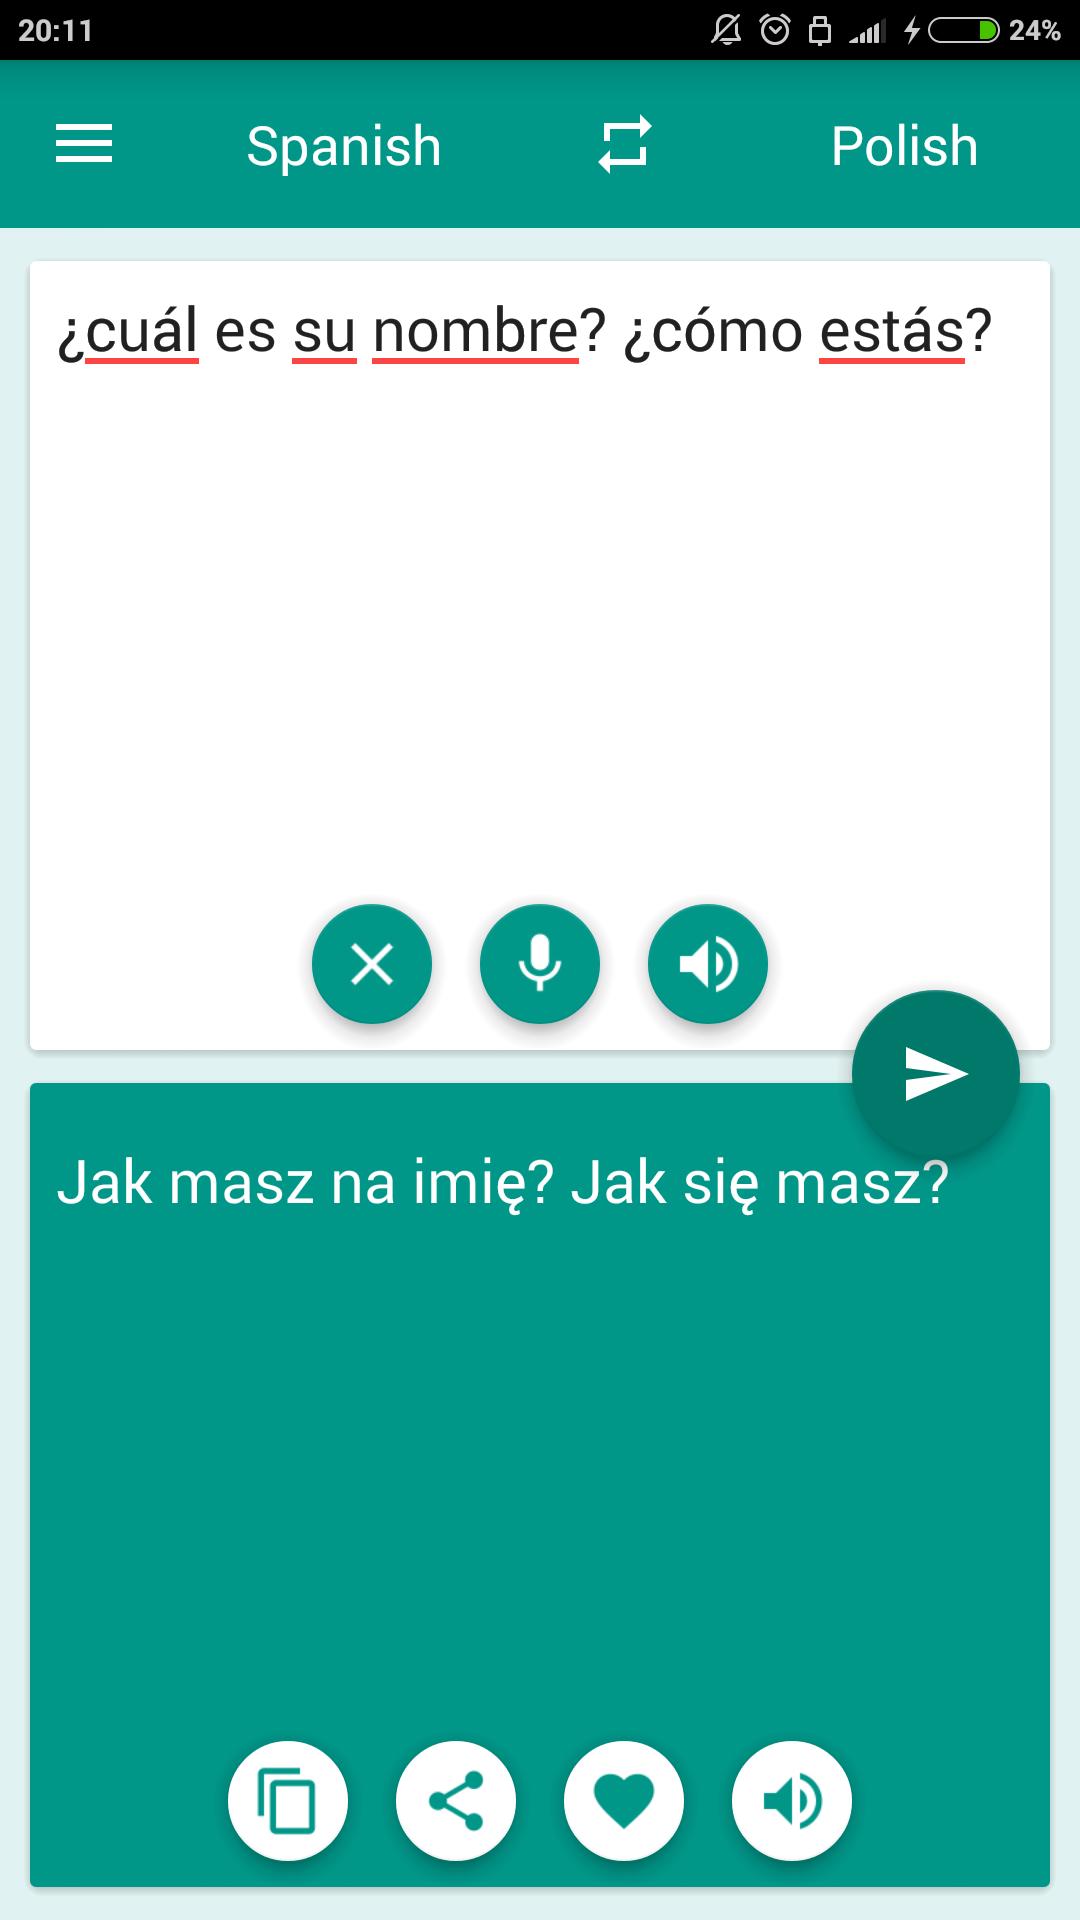 Polsko-hiszpański Tłumacz for Android - APK Download